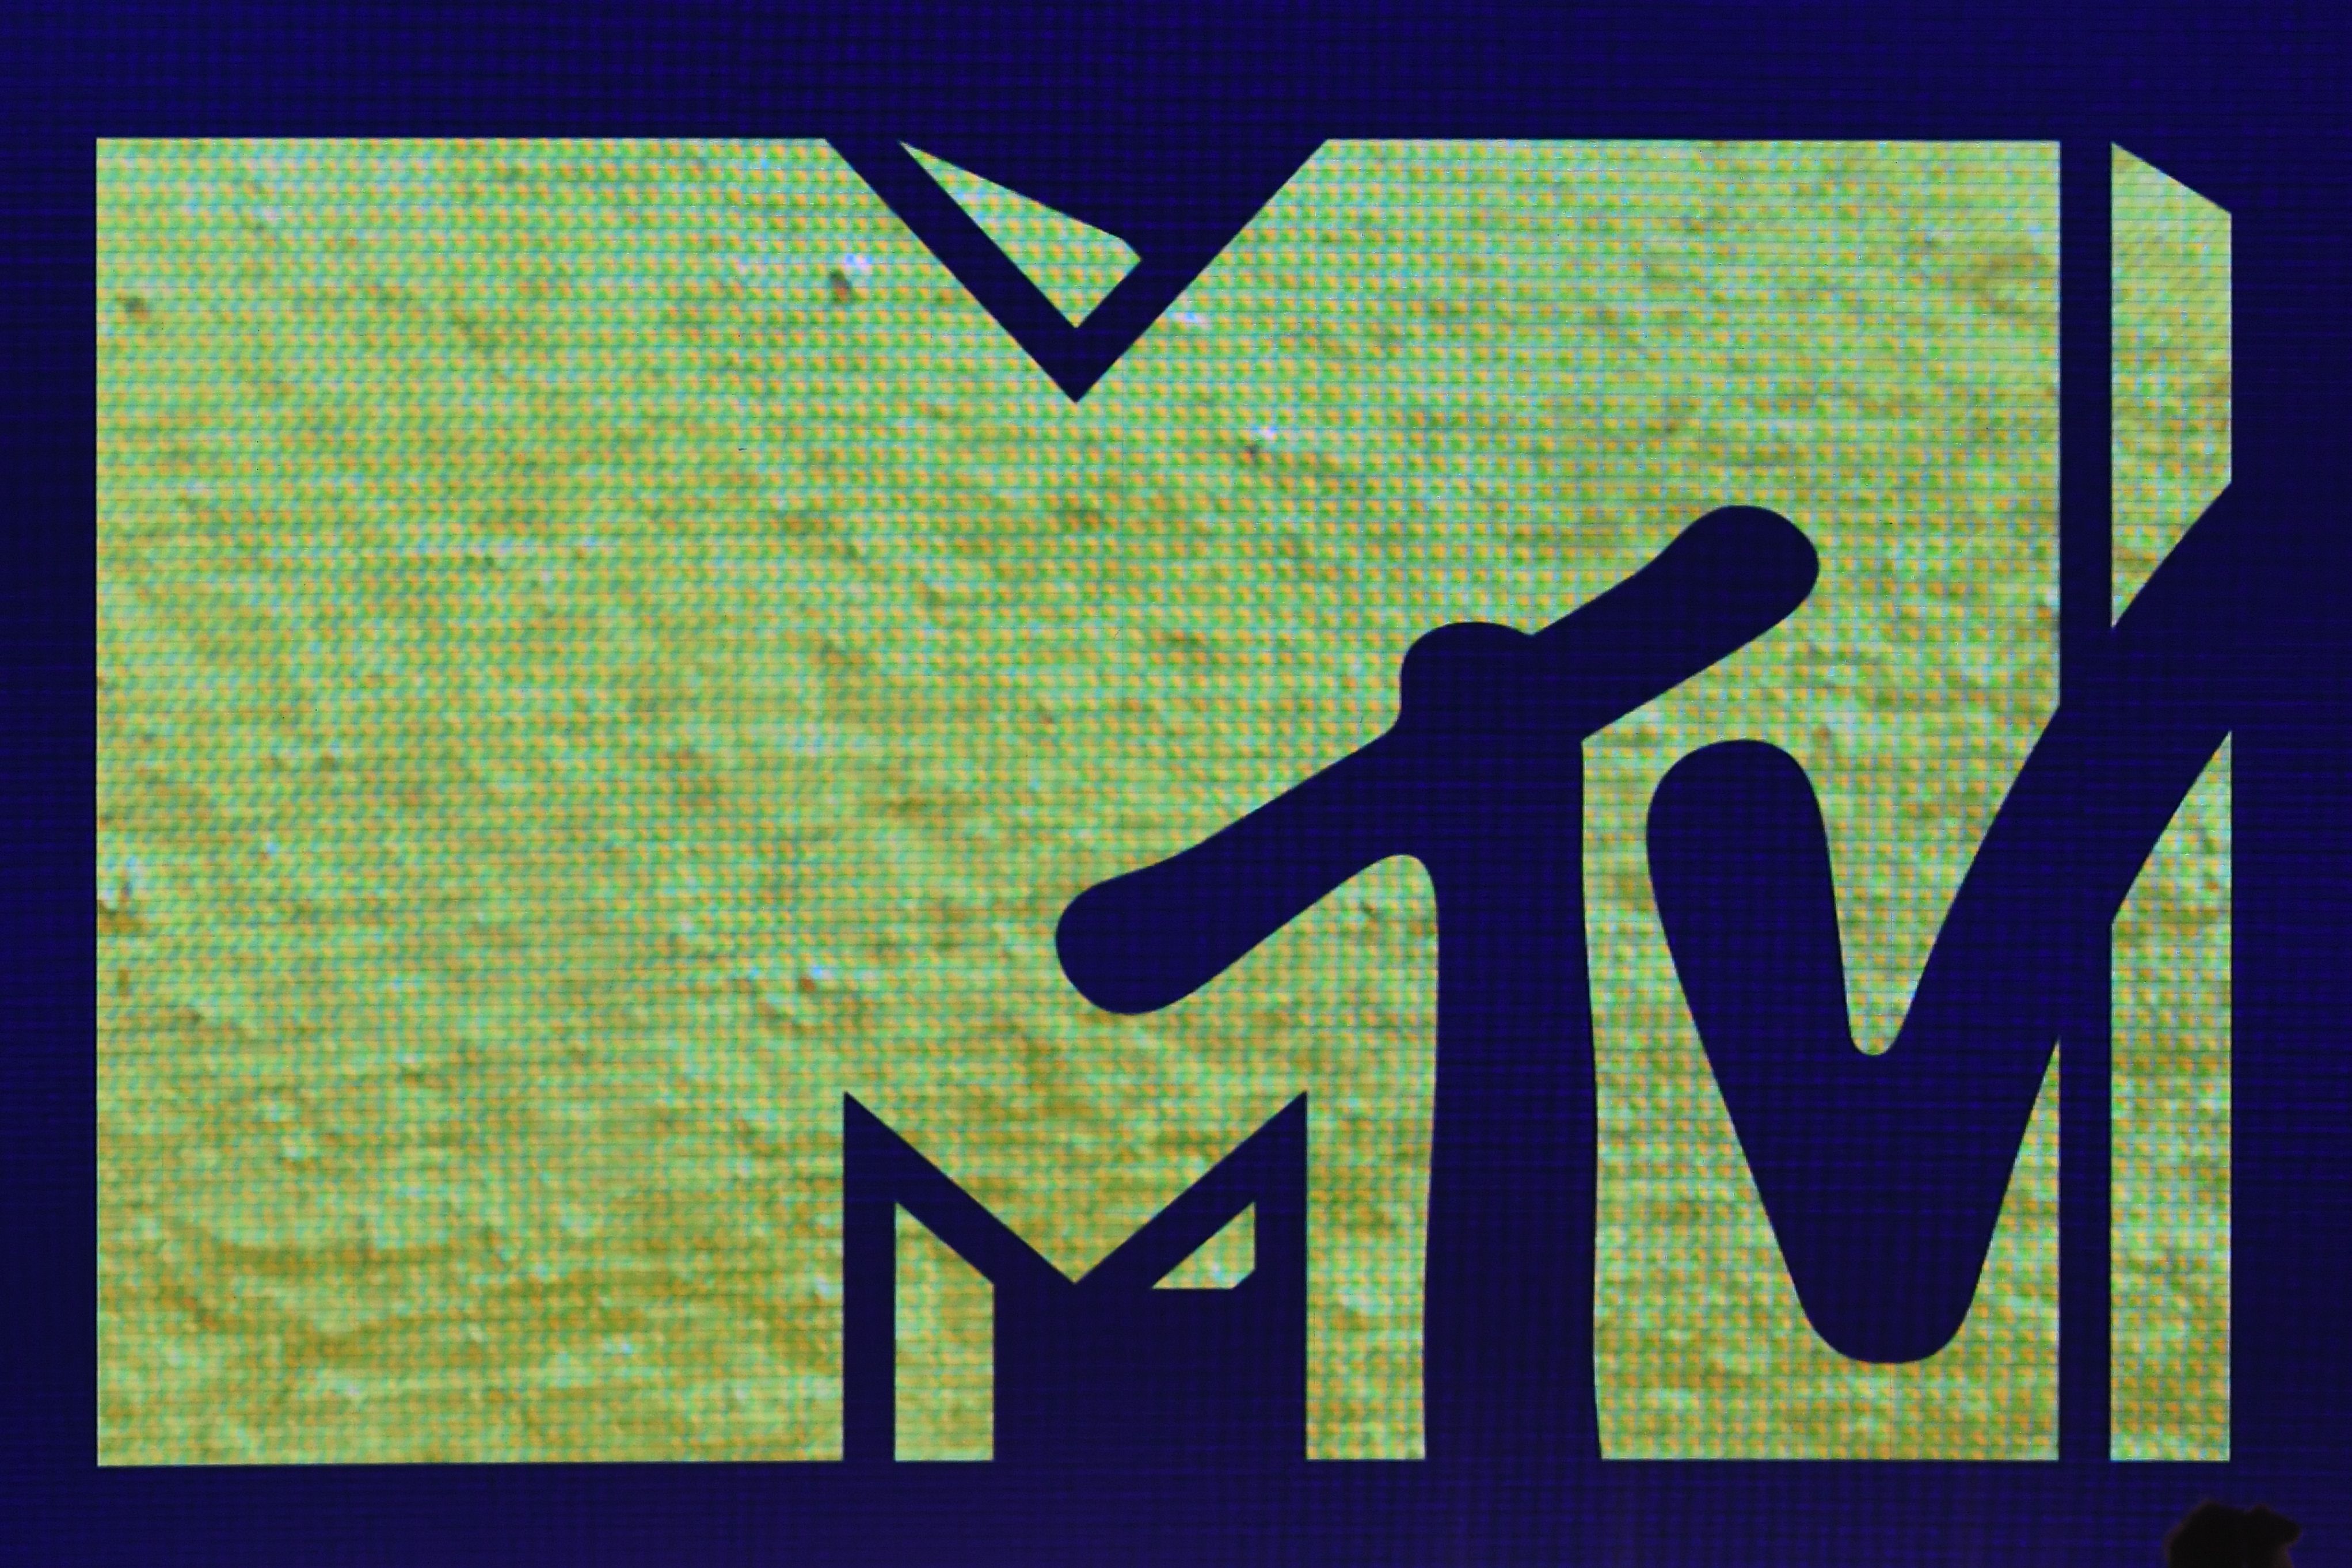 VMAs 2020 Date, Time, Channels & Location When Is It On TV Tonight